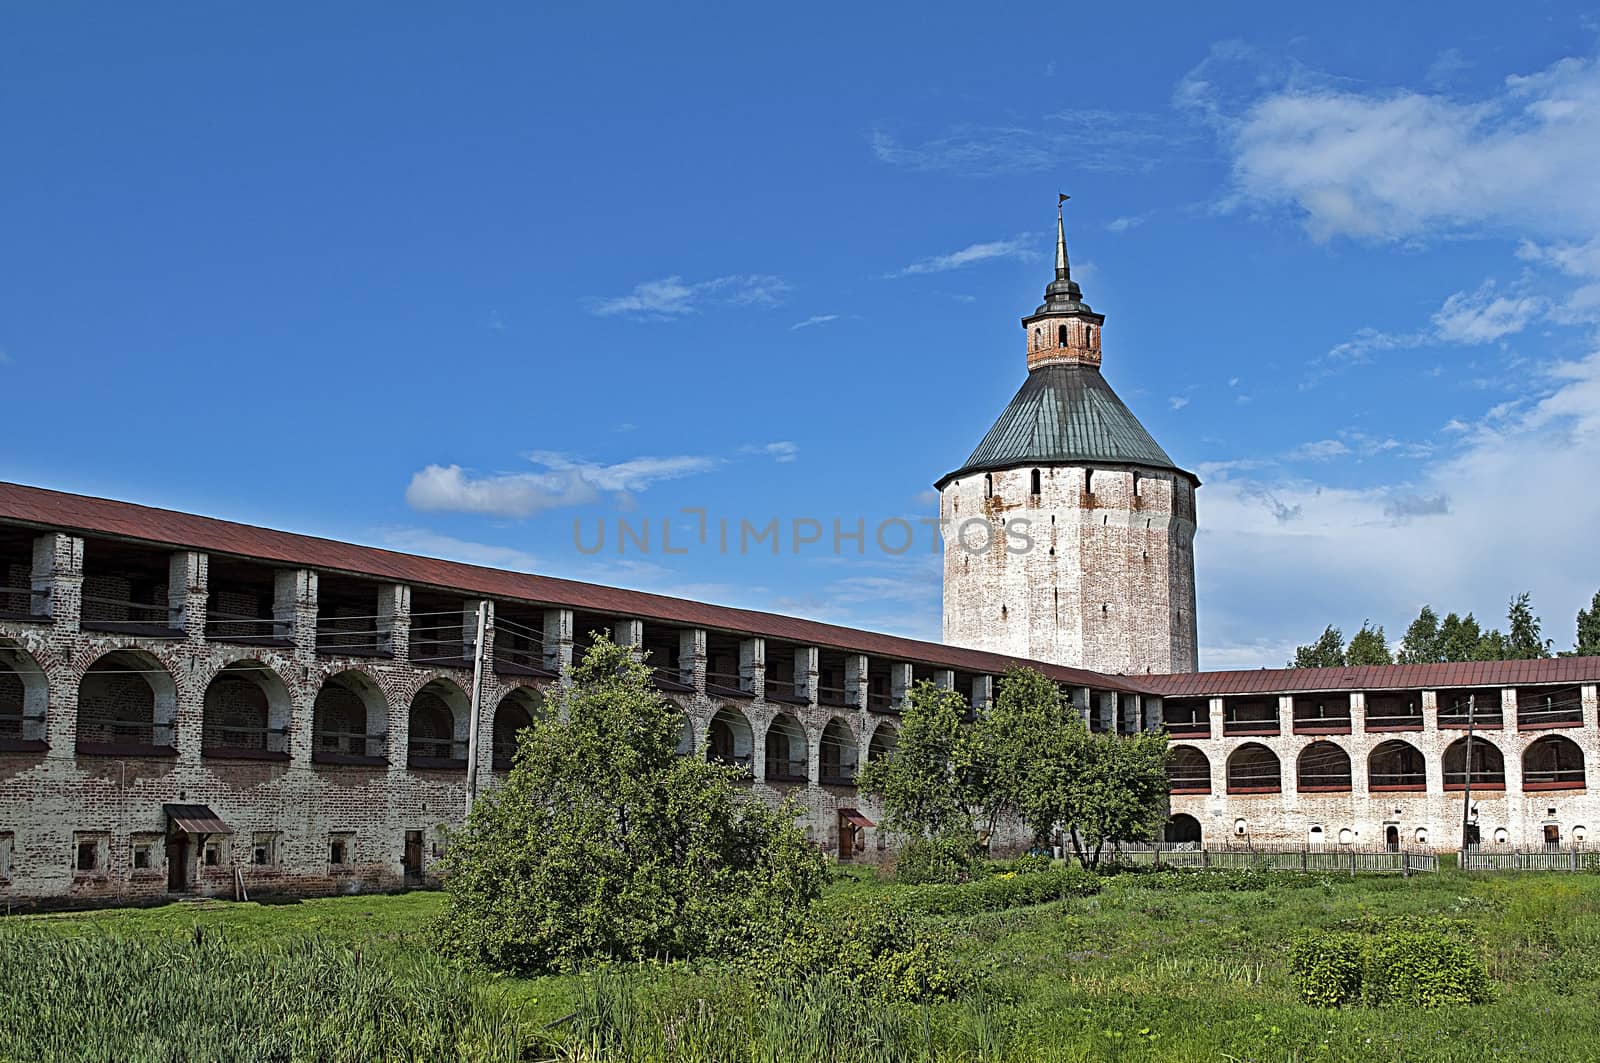 Courtyard and Ferapontov tower of Kirillo-Belozersky monastery (St. Cyril-Belozersk monastery), northern Russia